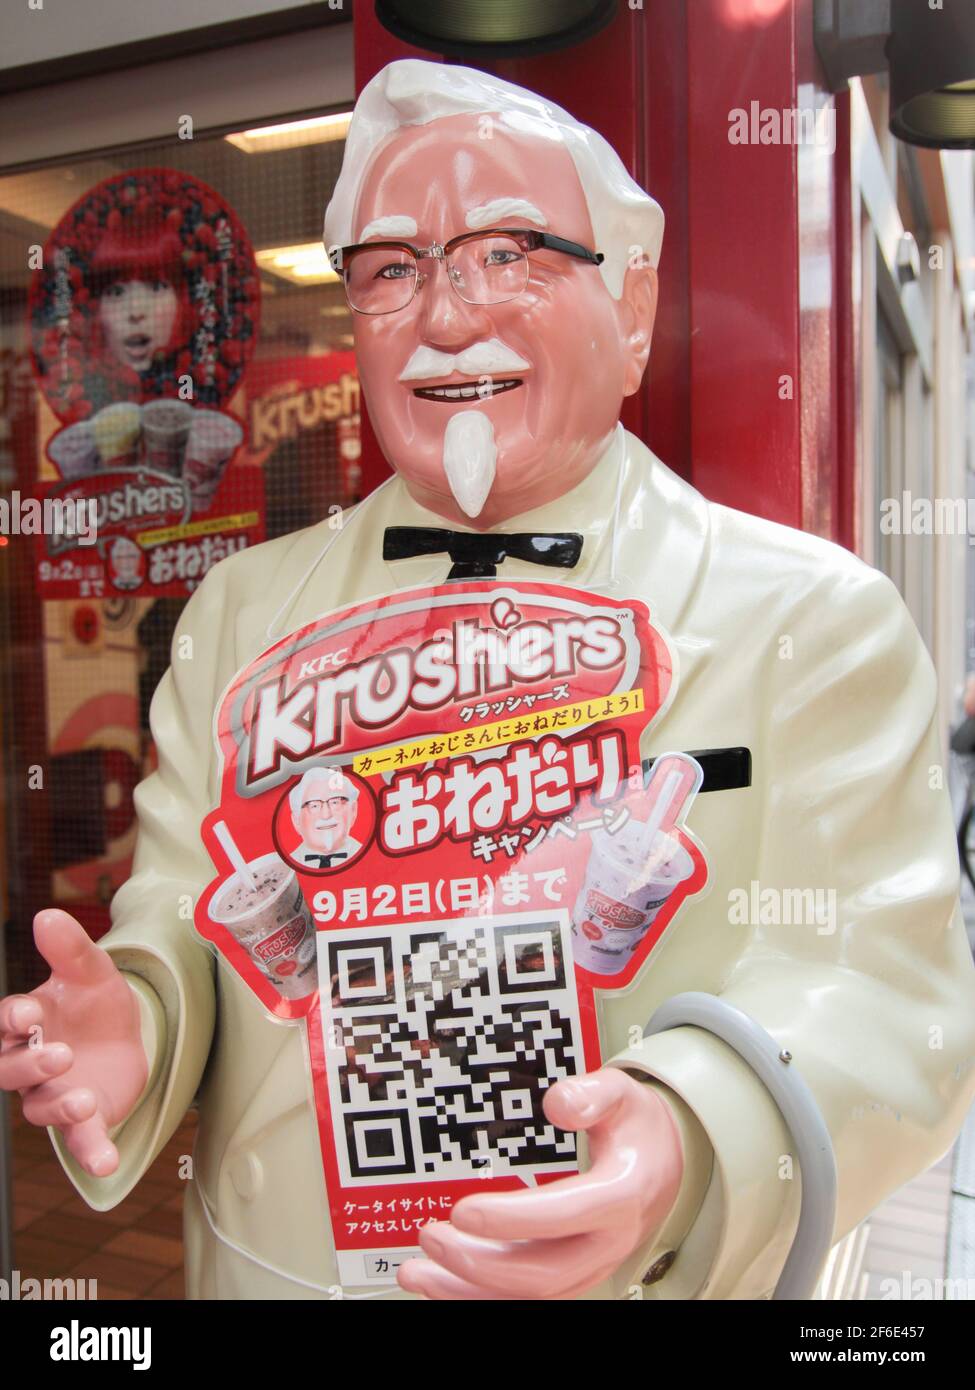 A plastic, fiberglass, life-size, statue, sculpture figure, image of Colonel Sanders, symbol of KFC, Kentucky Fried Chicken. In Kyoto, Japan. Stock Photo